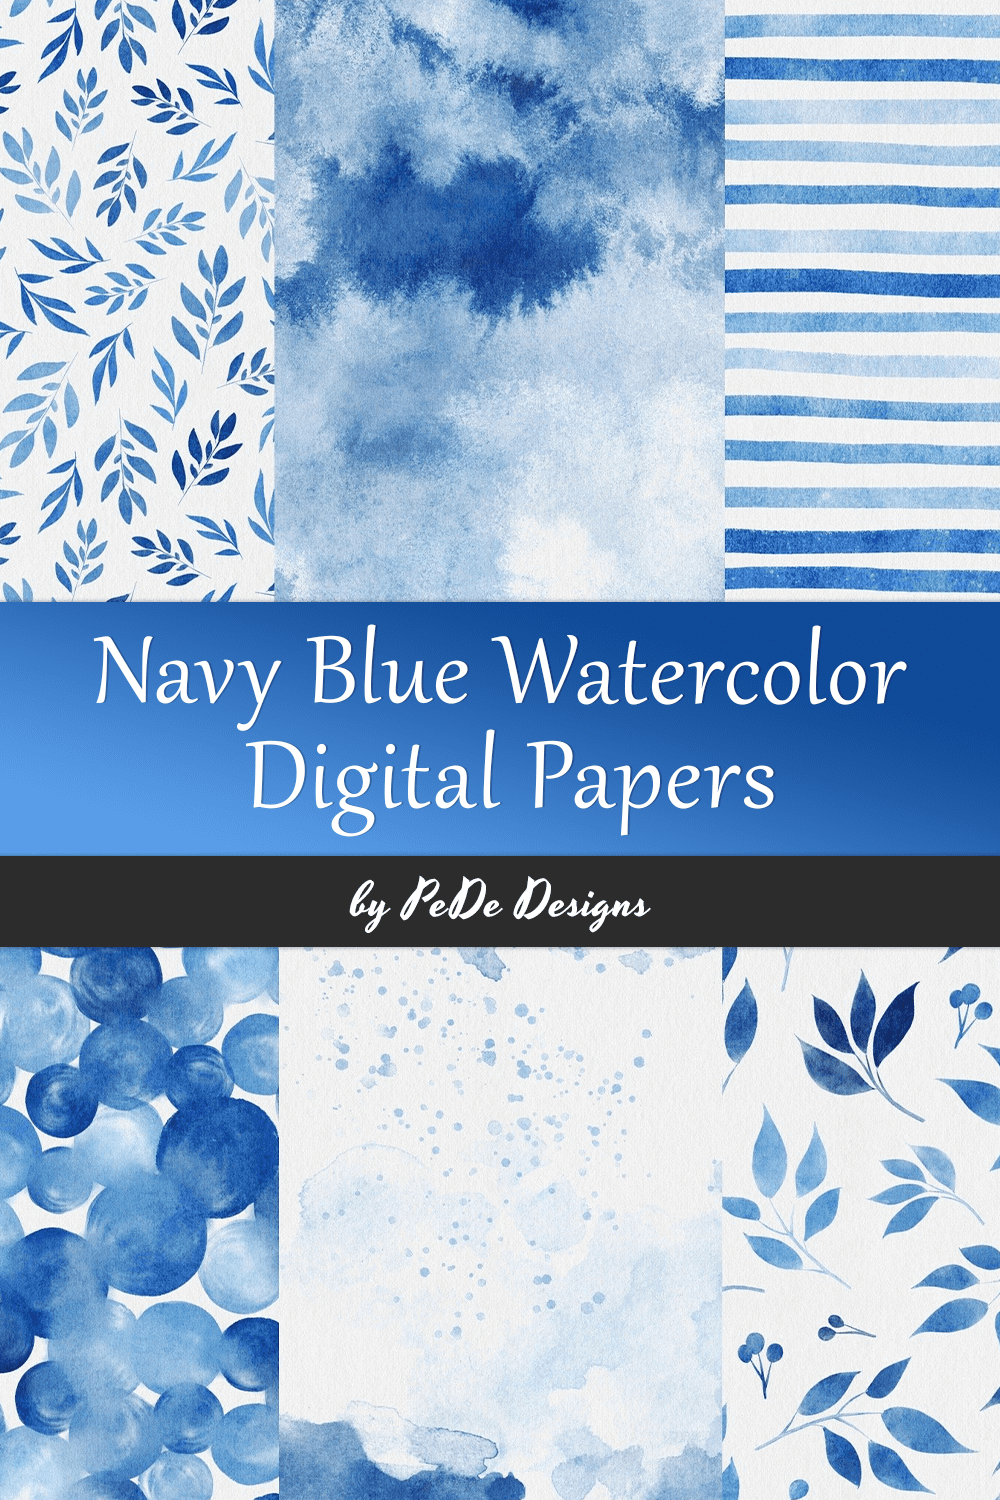 Navy Blue Watercolor Digital Papers - Pinterest.